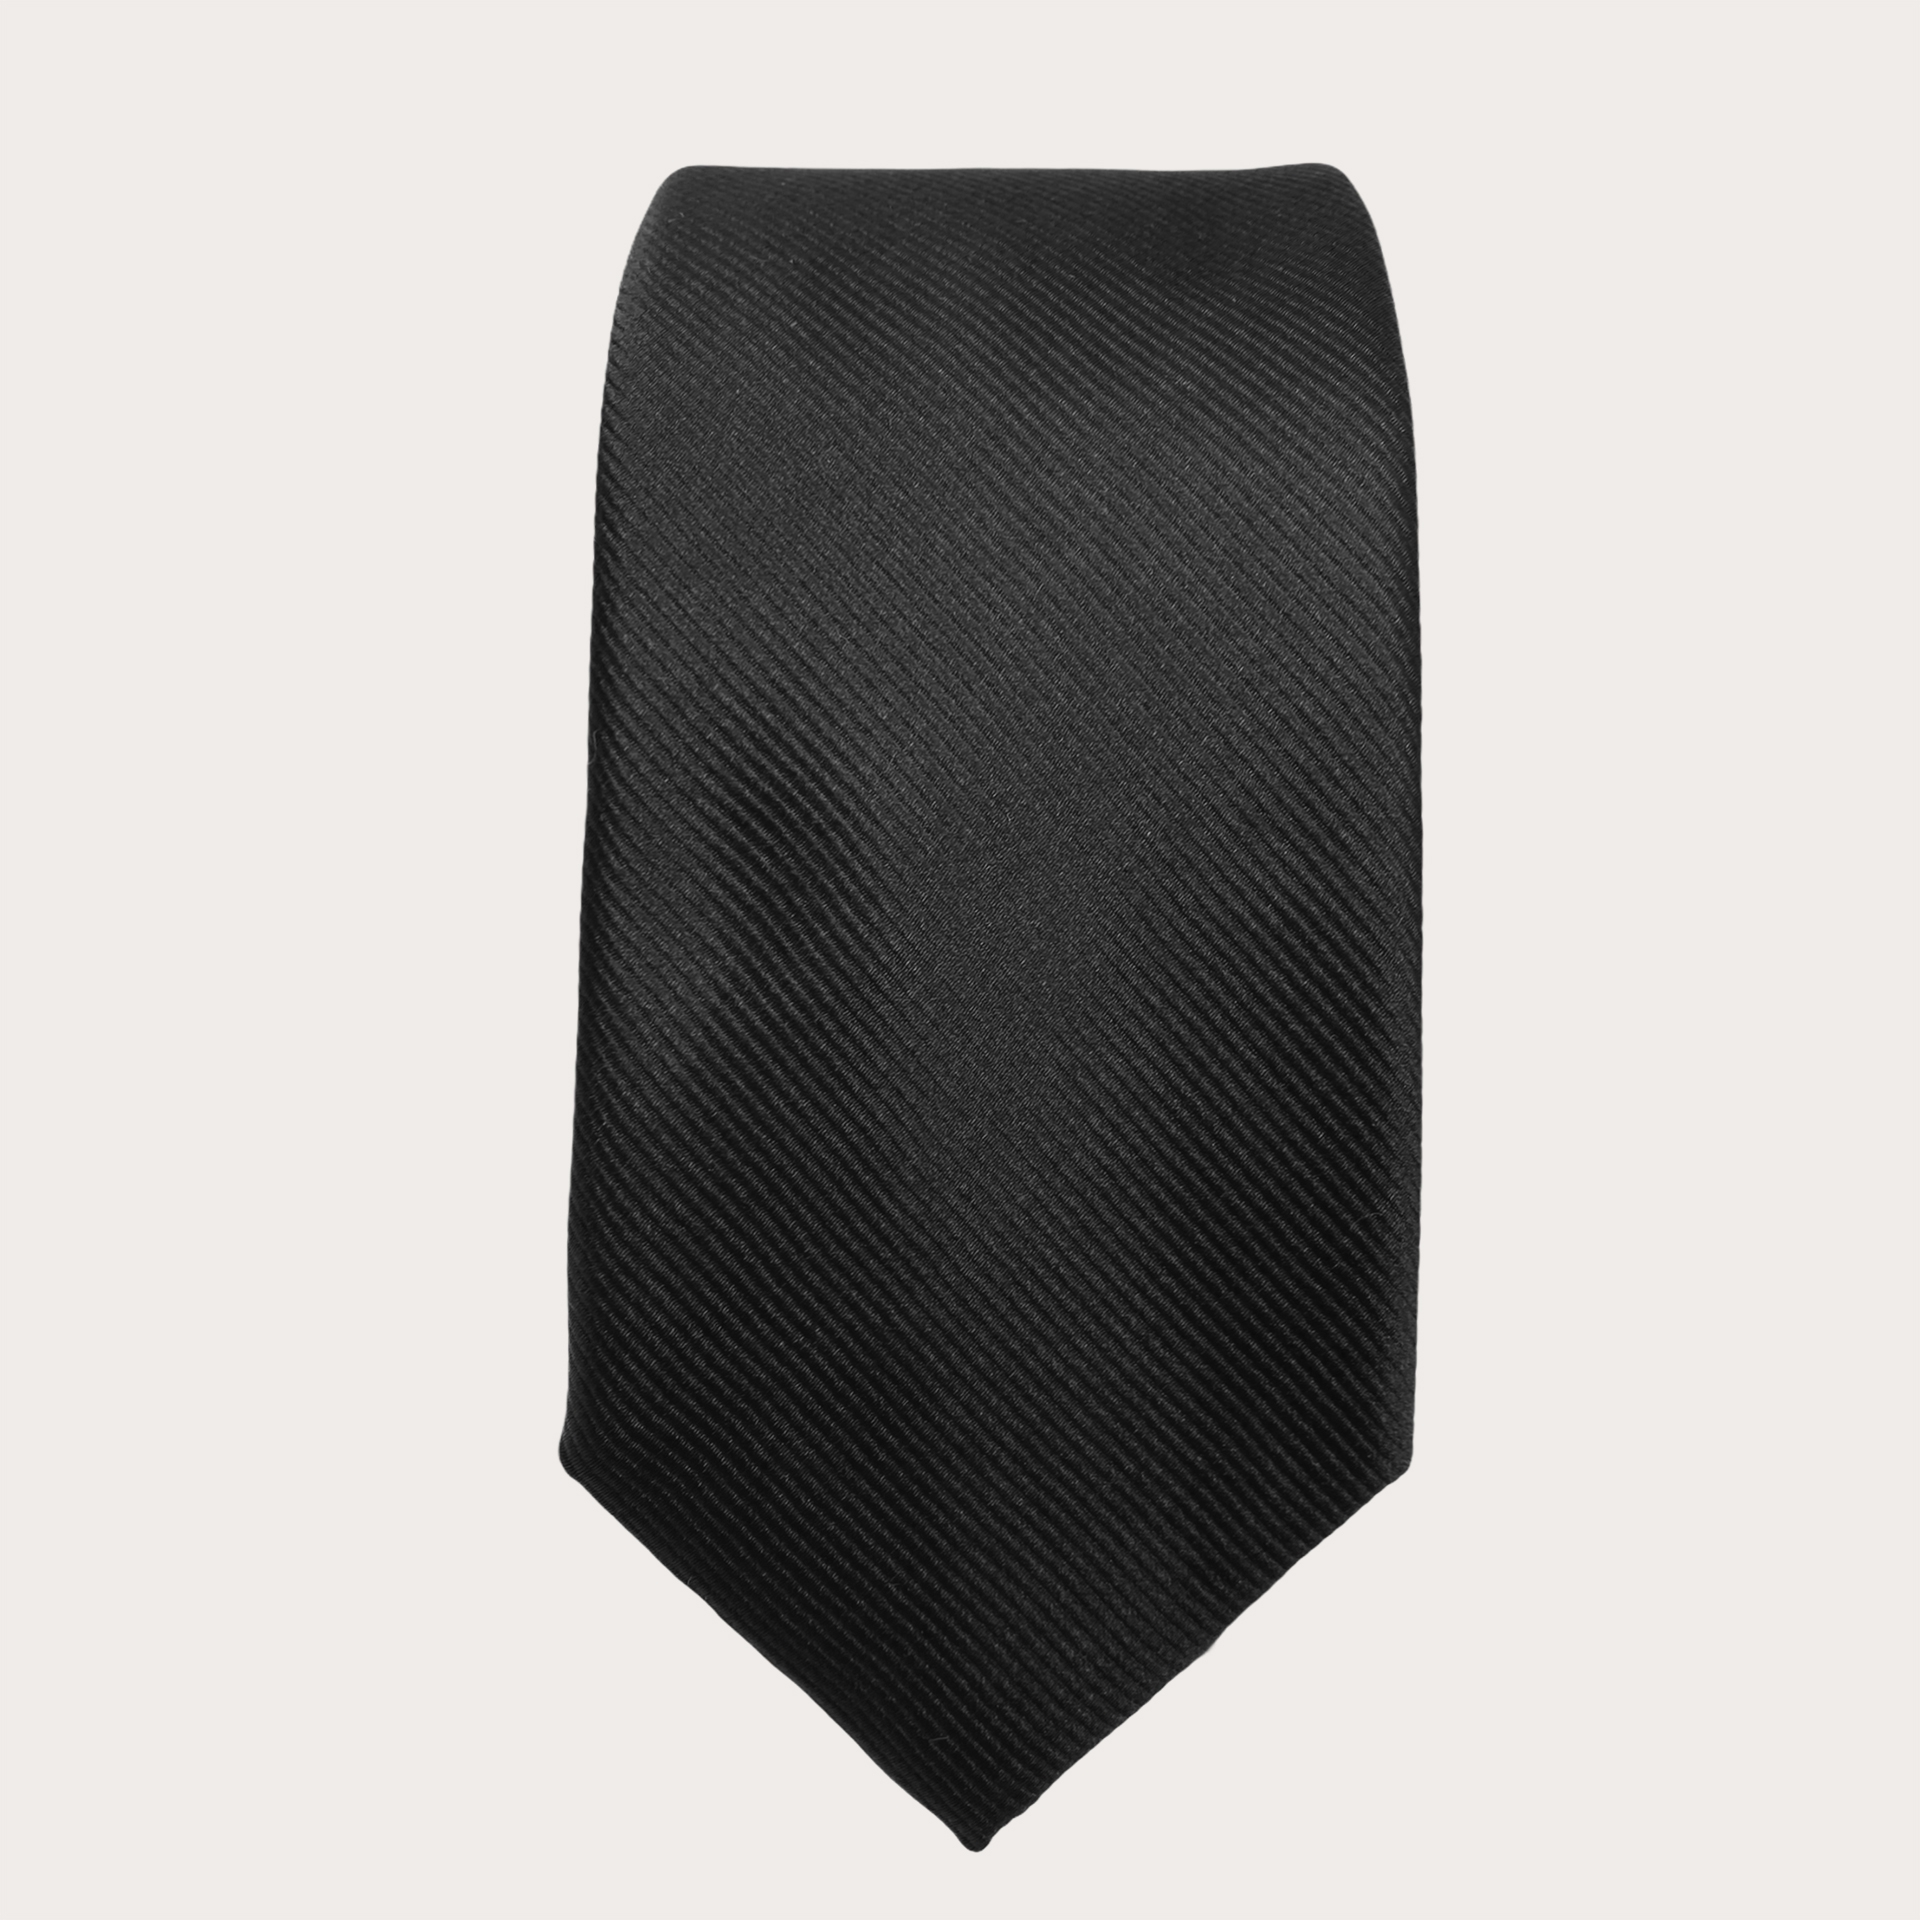 BRUCLE Corbata clásica en pura seda, negra